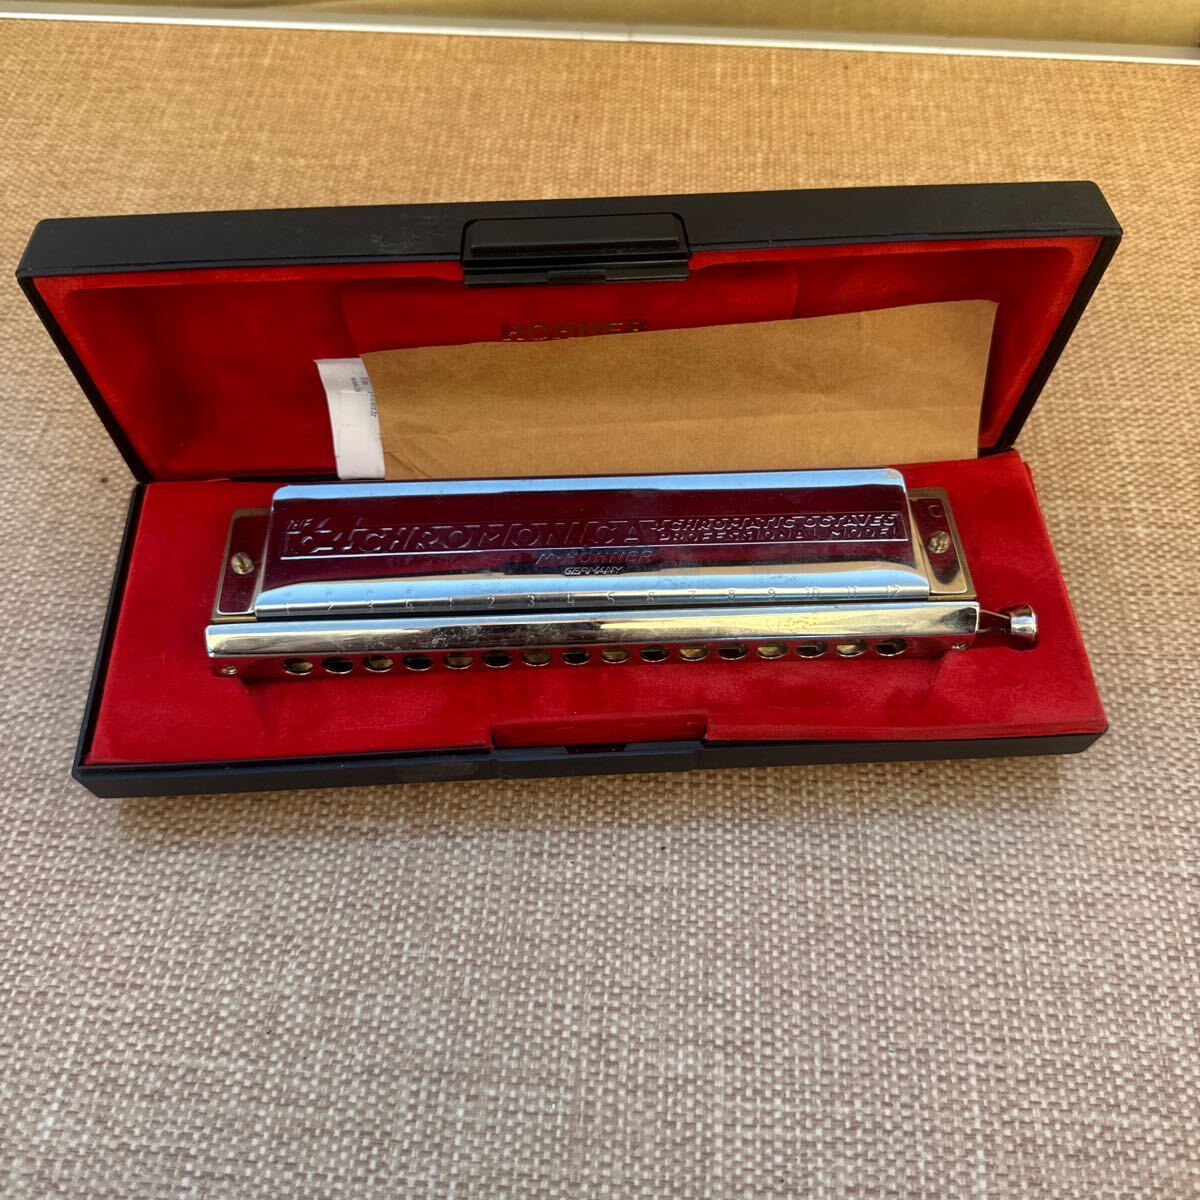  secondhand goods HOHNER harmonica 